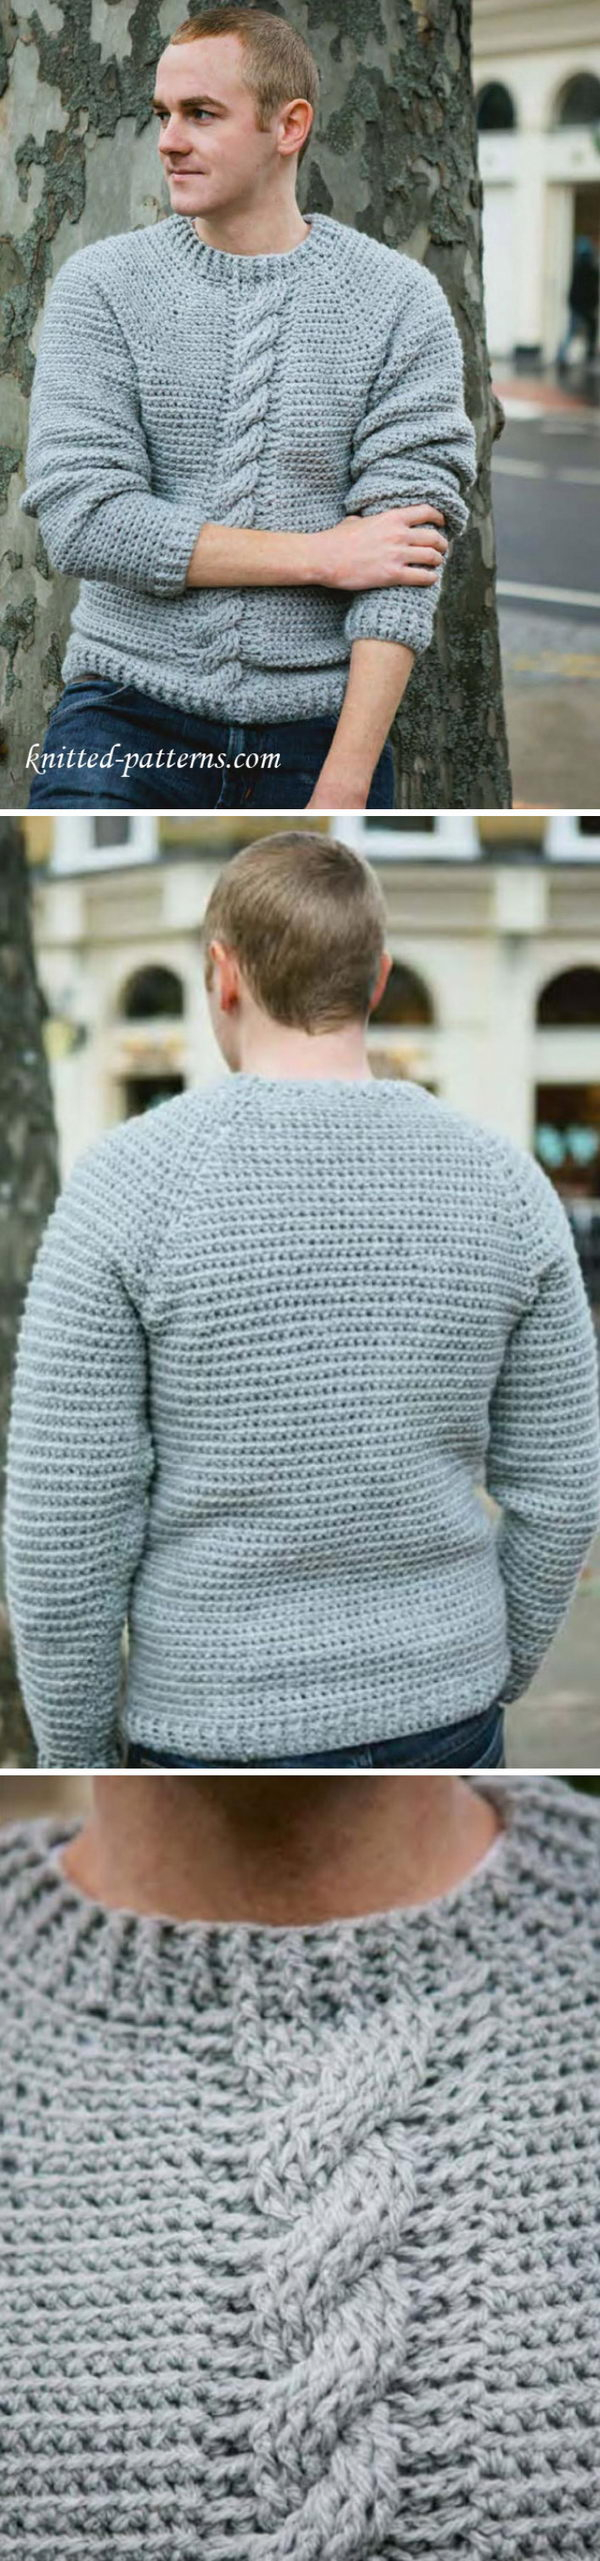 Free Knitting Patterns For Men's Sweaters 15 Crochet Men Sweater Patterns 2019